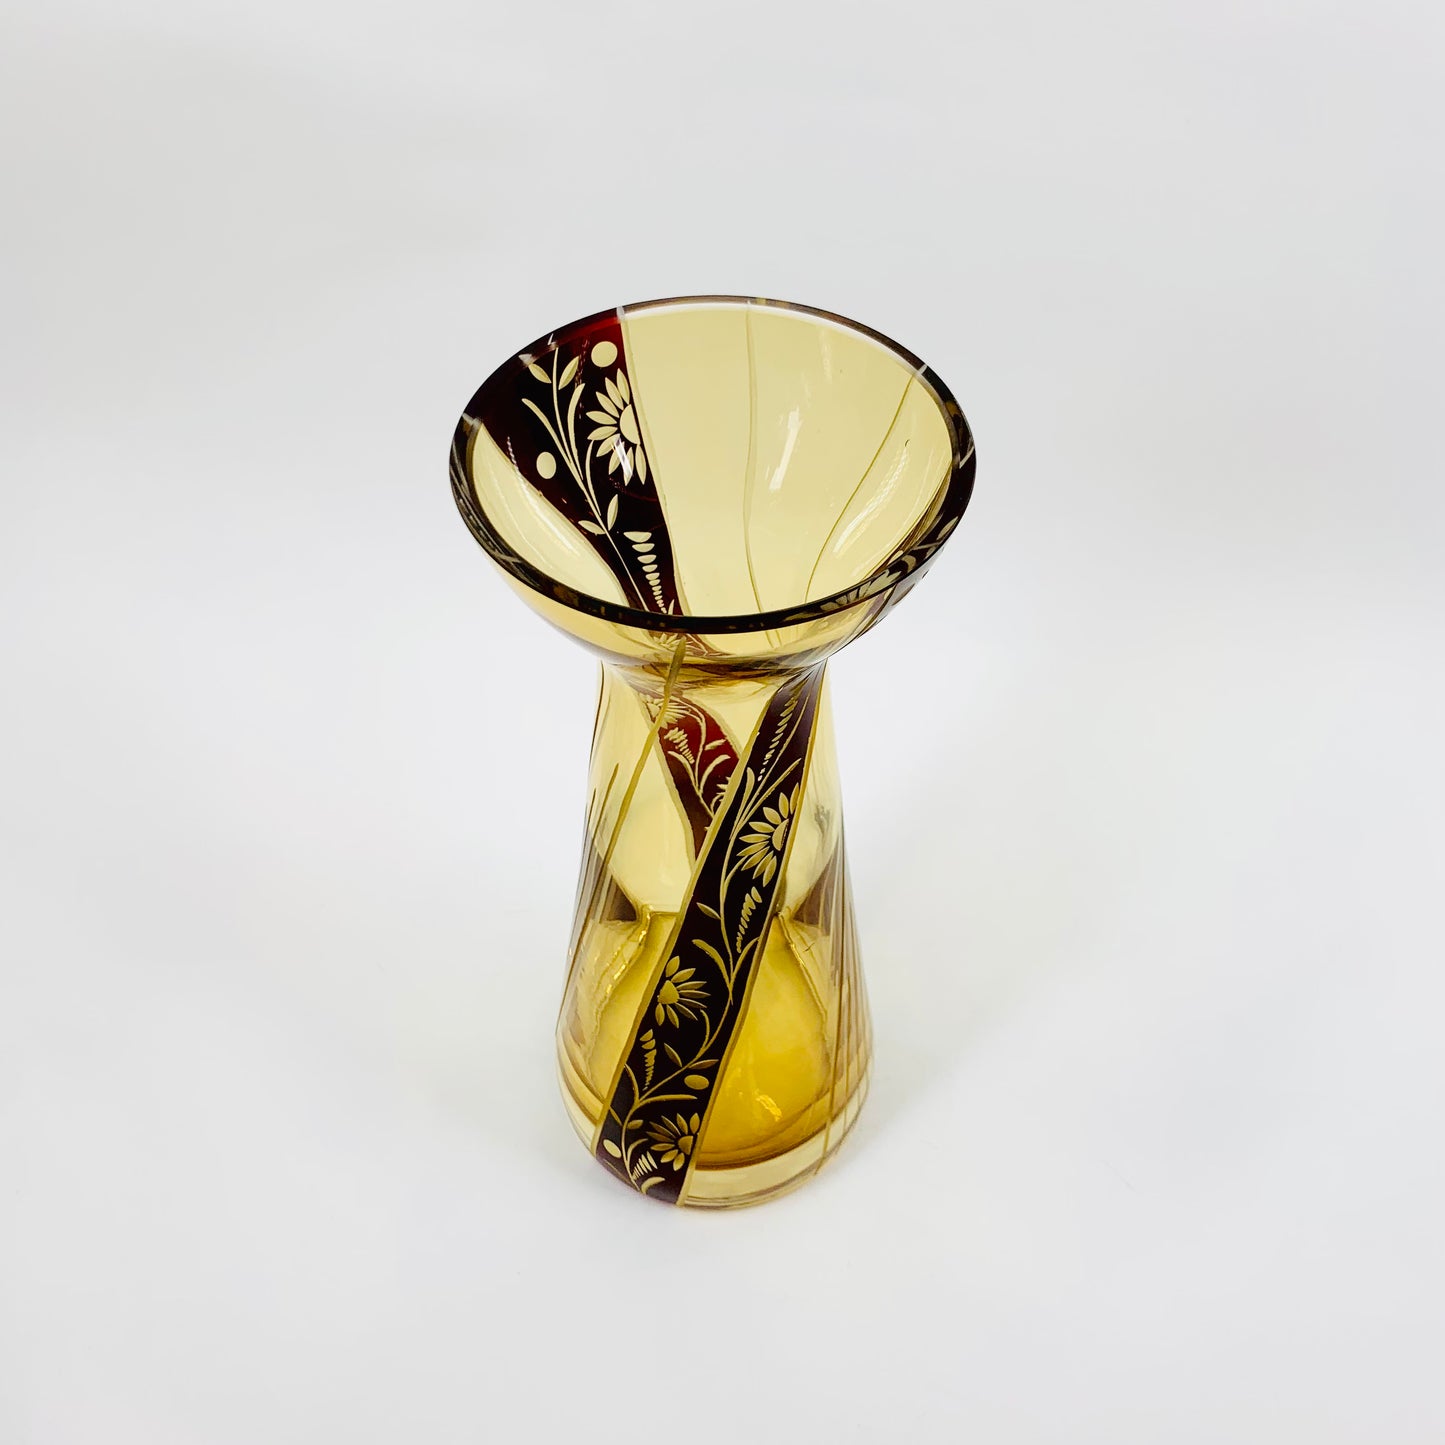 Antique Art Deco ruby enamel citrine glass hyacinth vase by Karl Palda